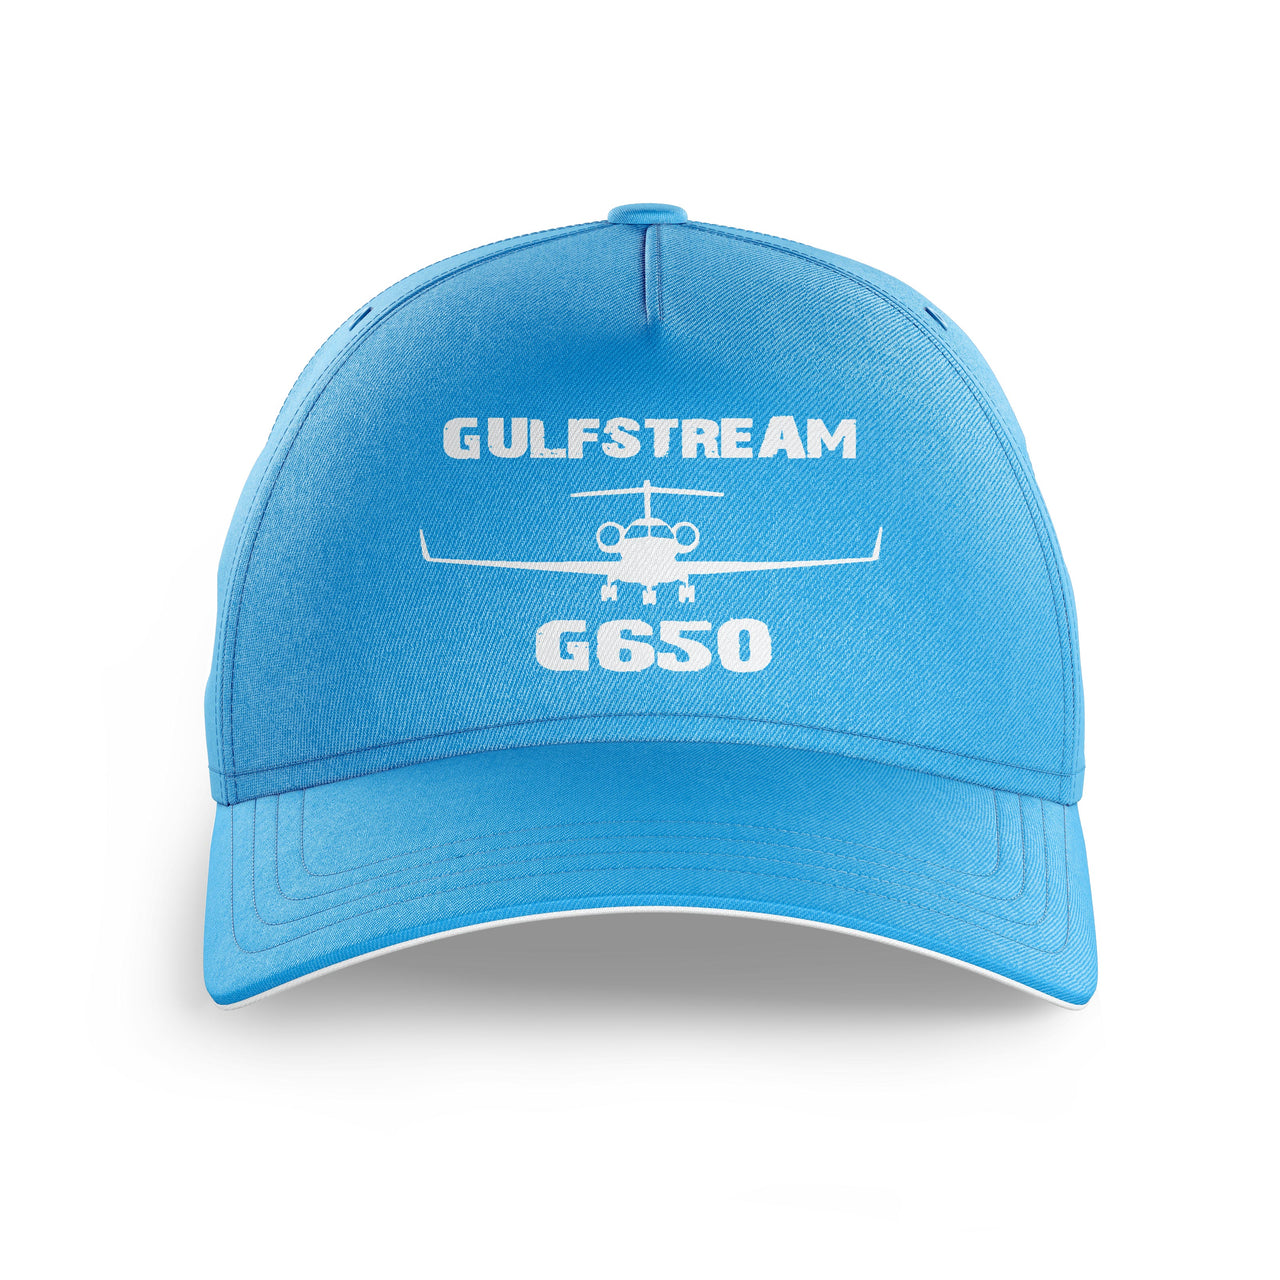 Gulfstream G650 & Plane Printed Hats